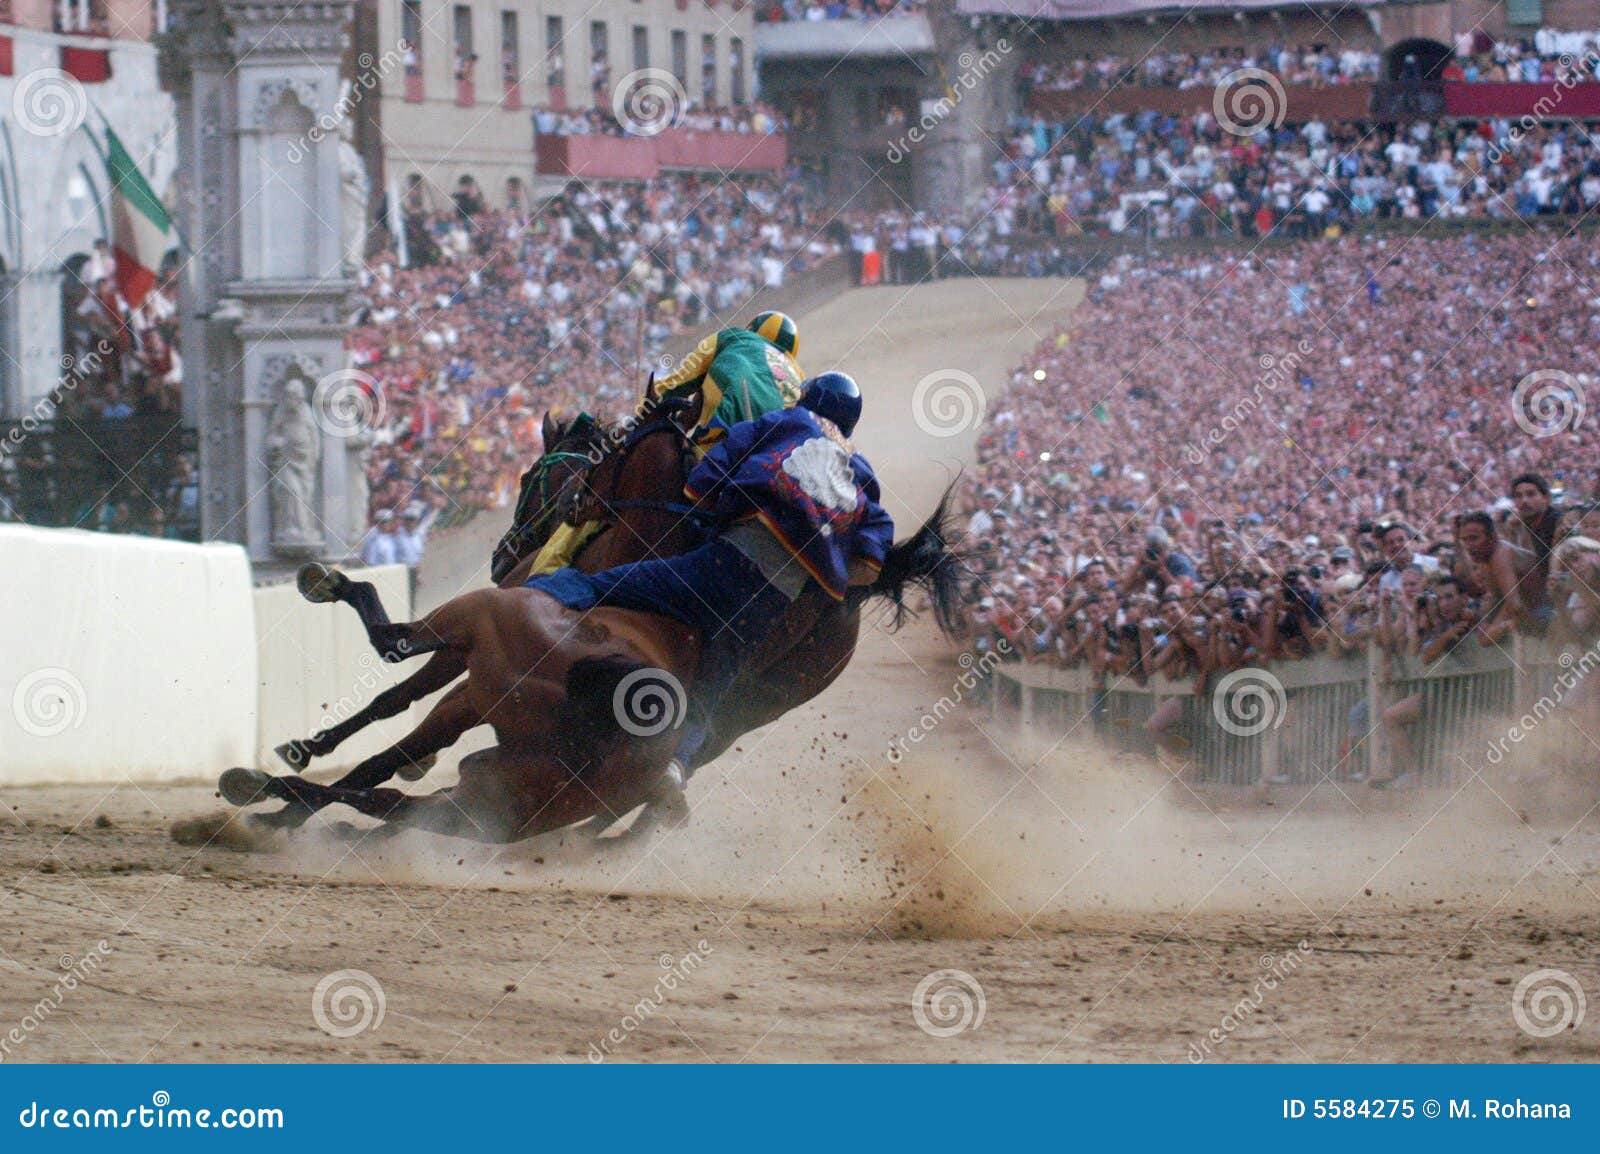 Ongunstig zonlicht huichelarij Siena s palio horse race editorial image. Image of riders - 5584275